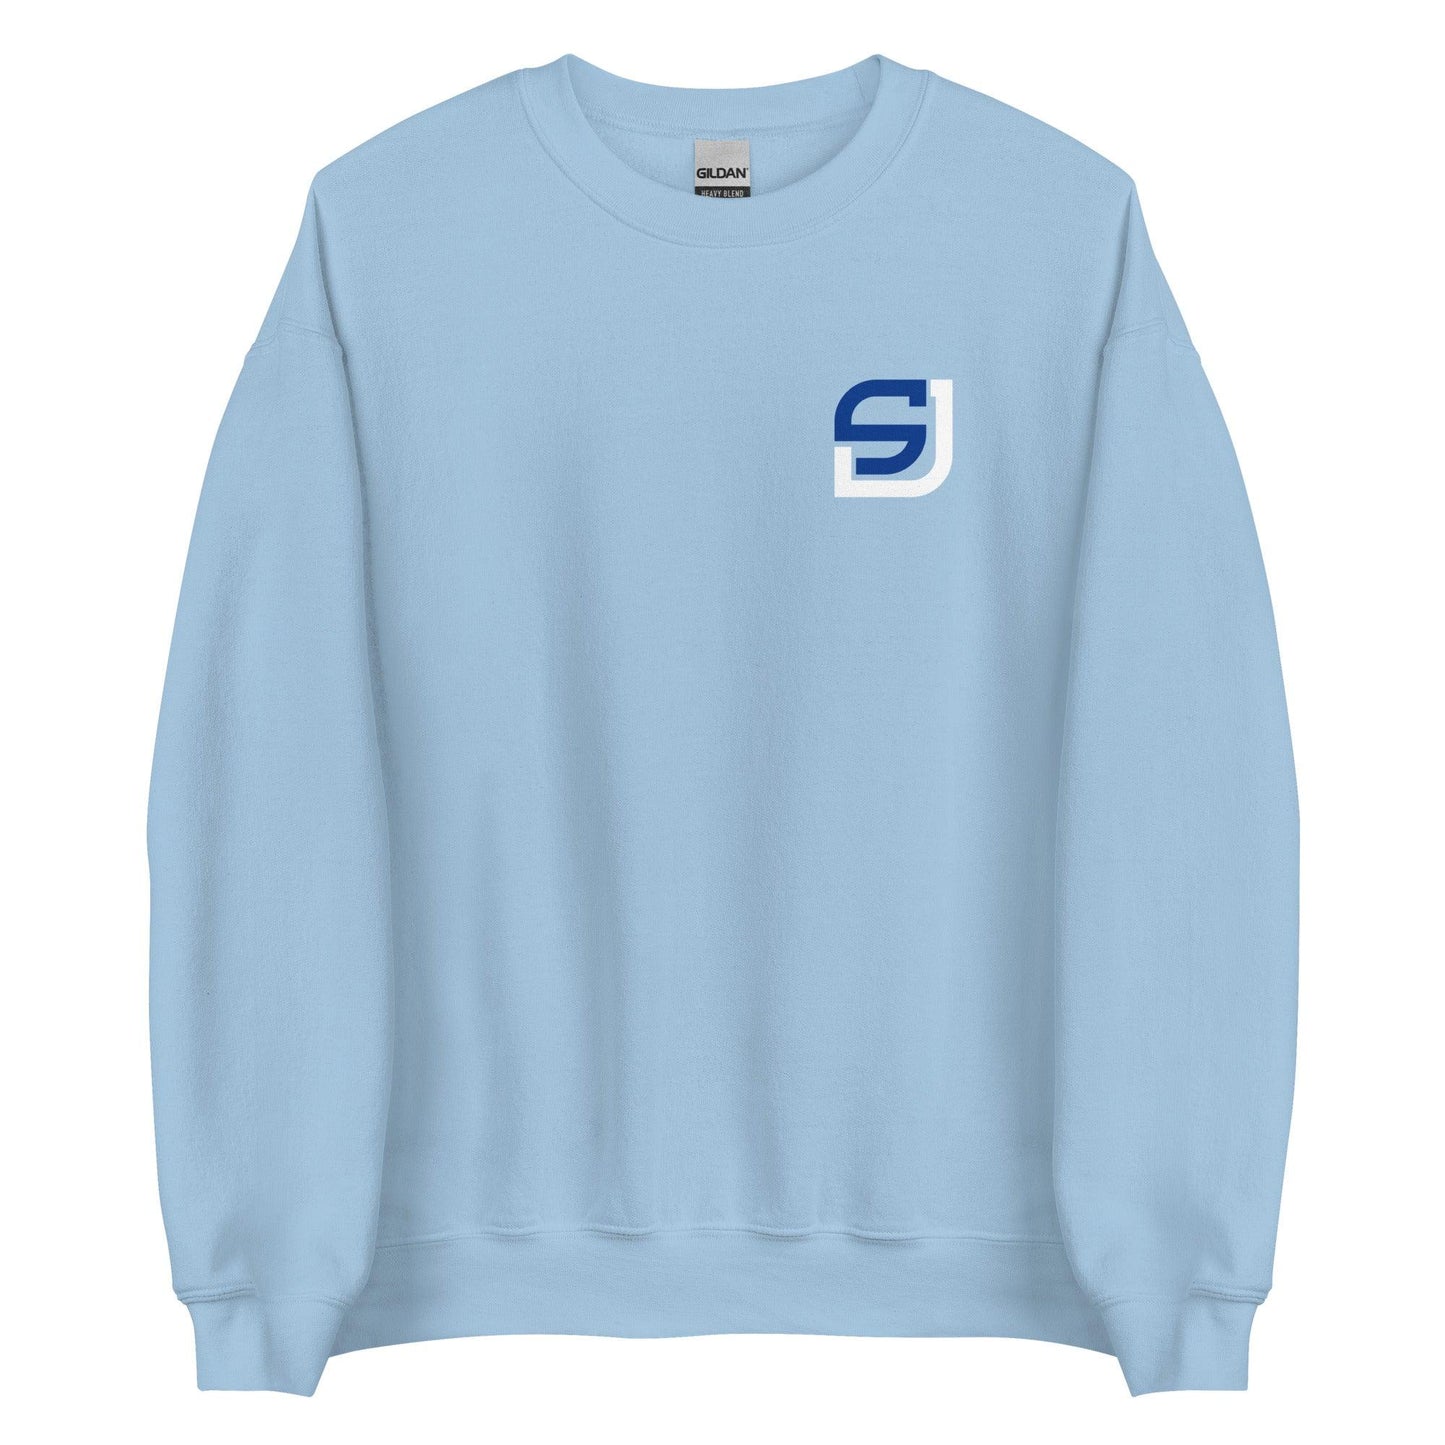 Jonathan Santucci “Essential” Sweatshirt - Fan Arch